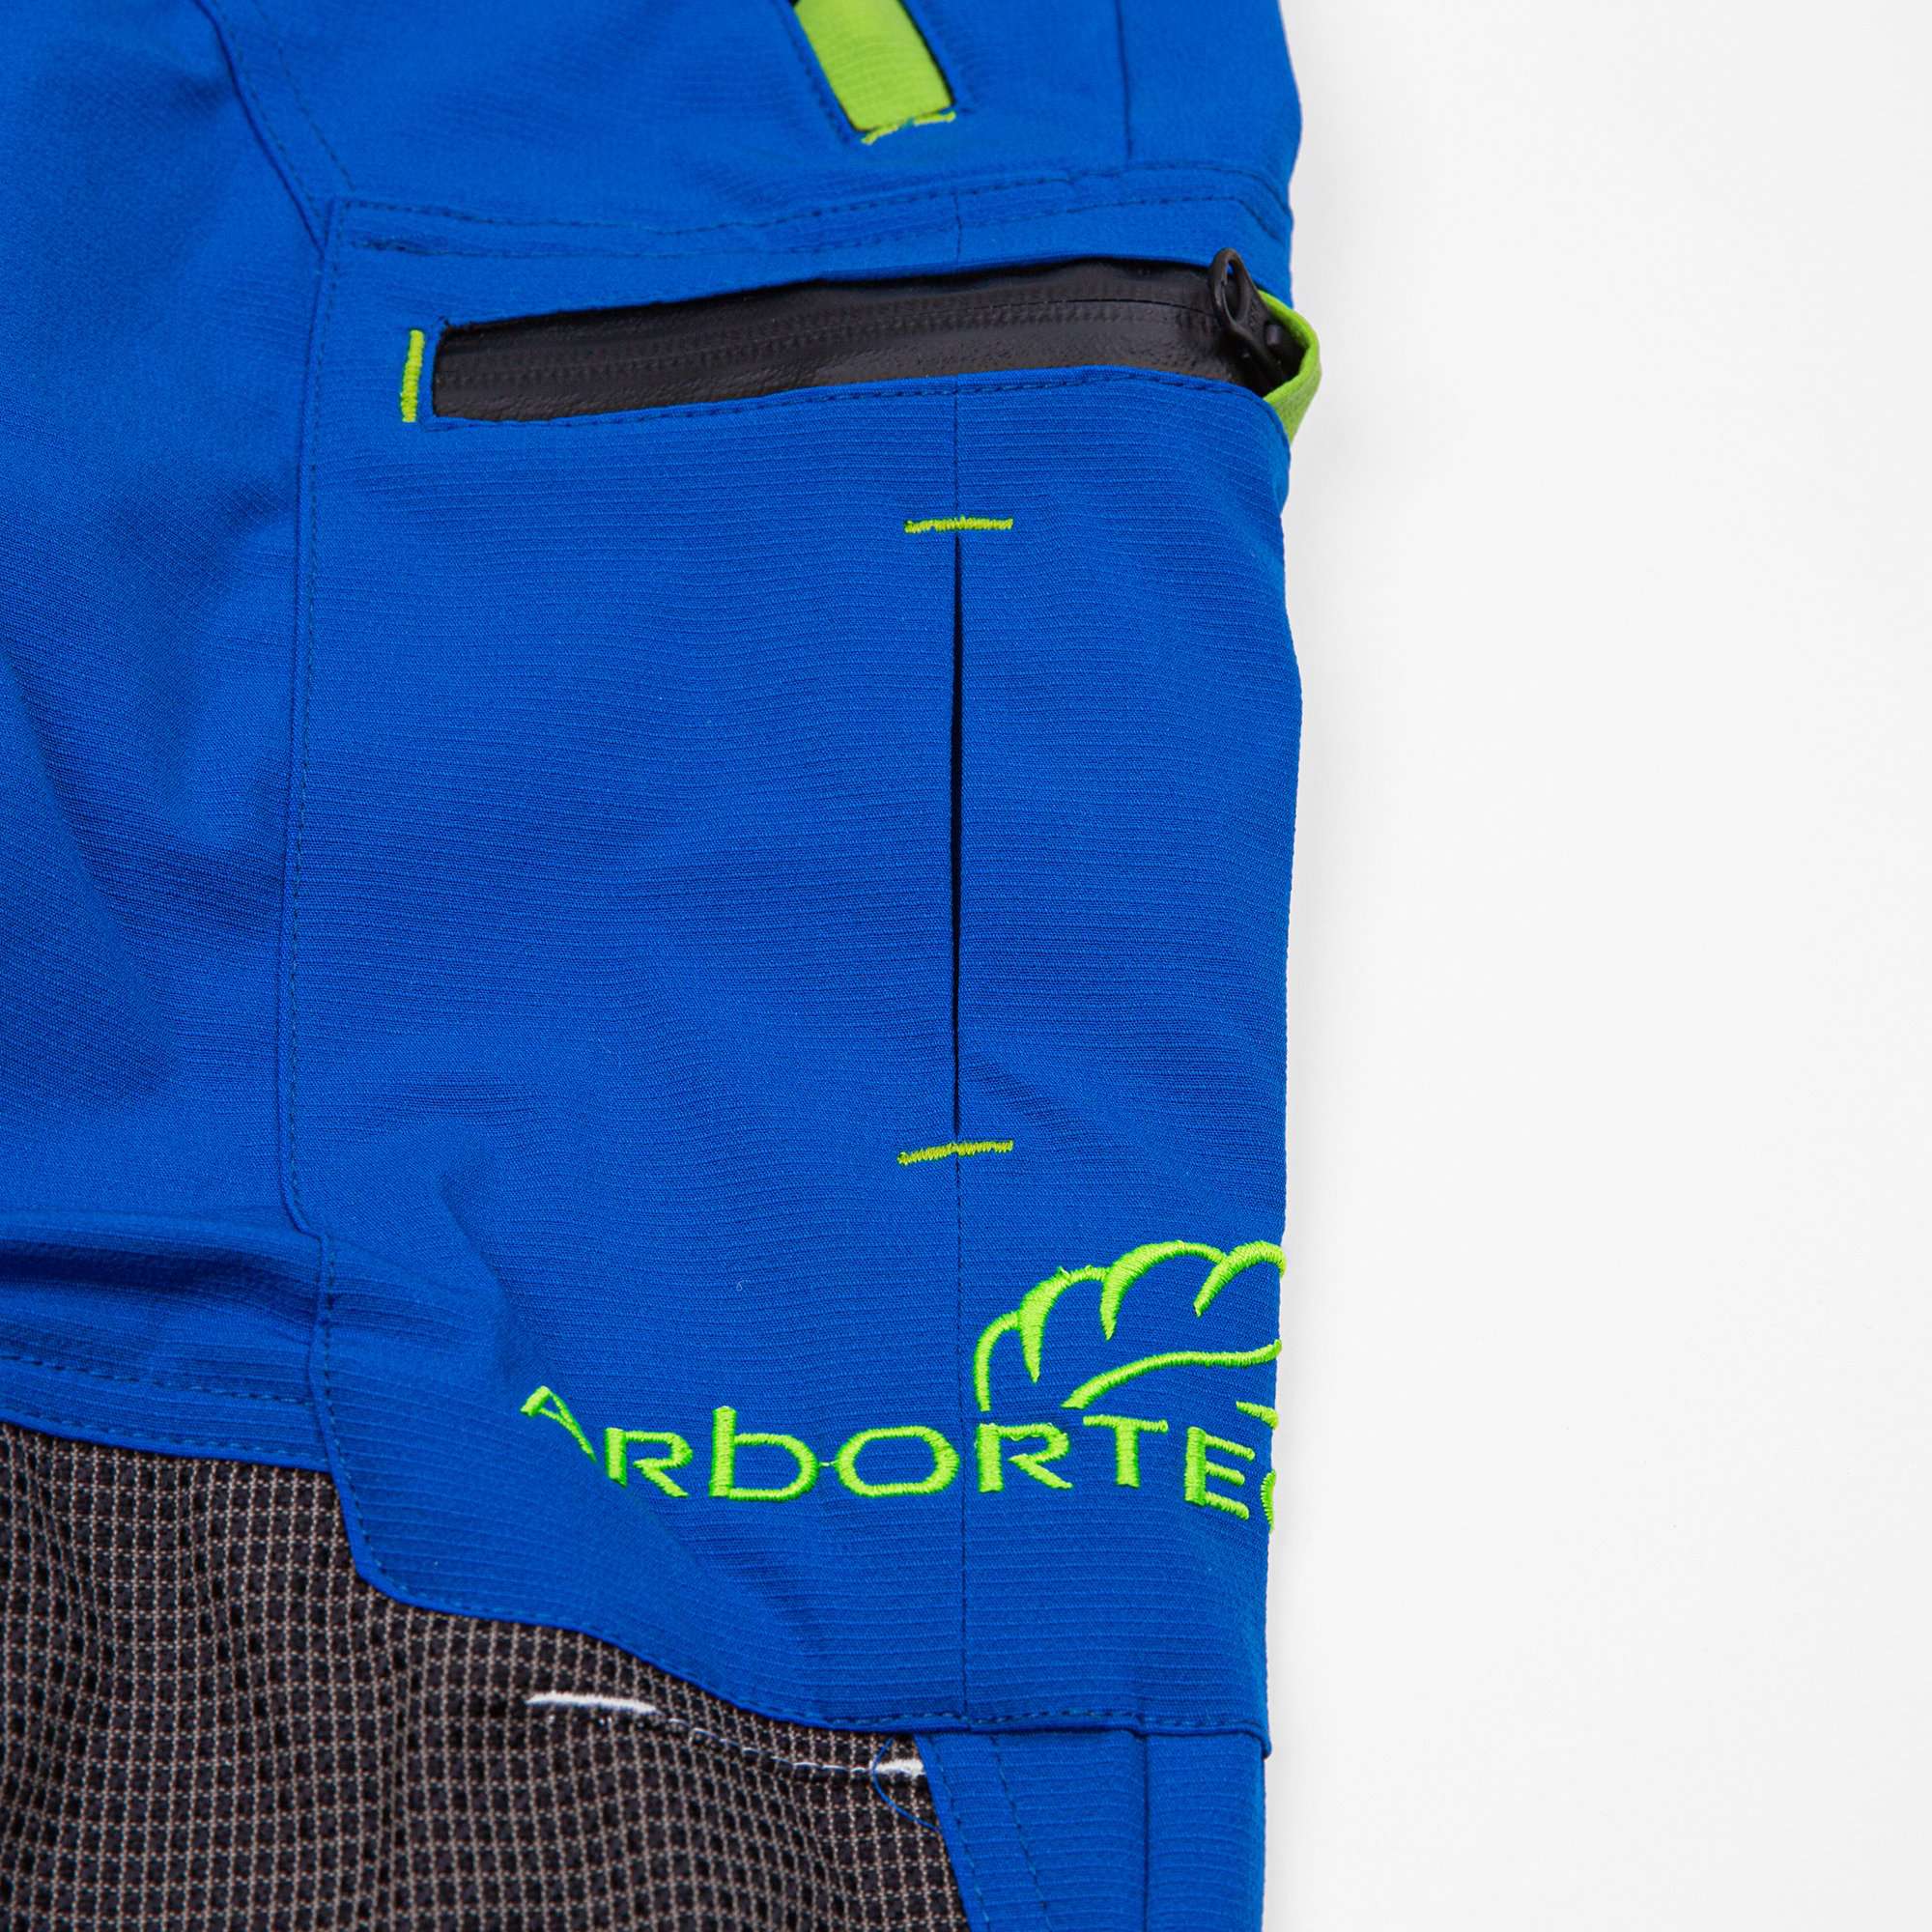 AT4160 Breatheflex Pro Non-Protective Trousers - Blue - Arbortec Forestwear